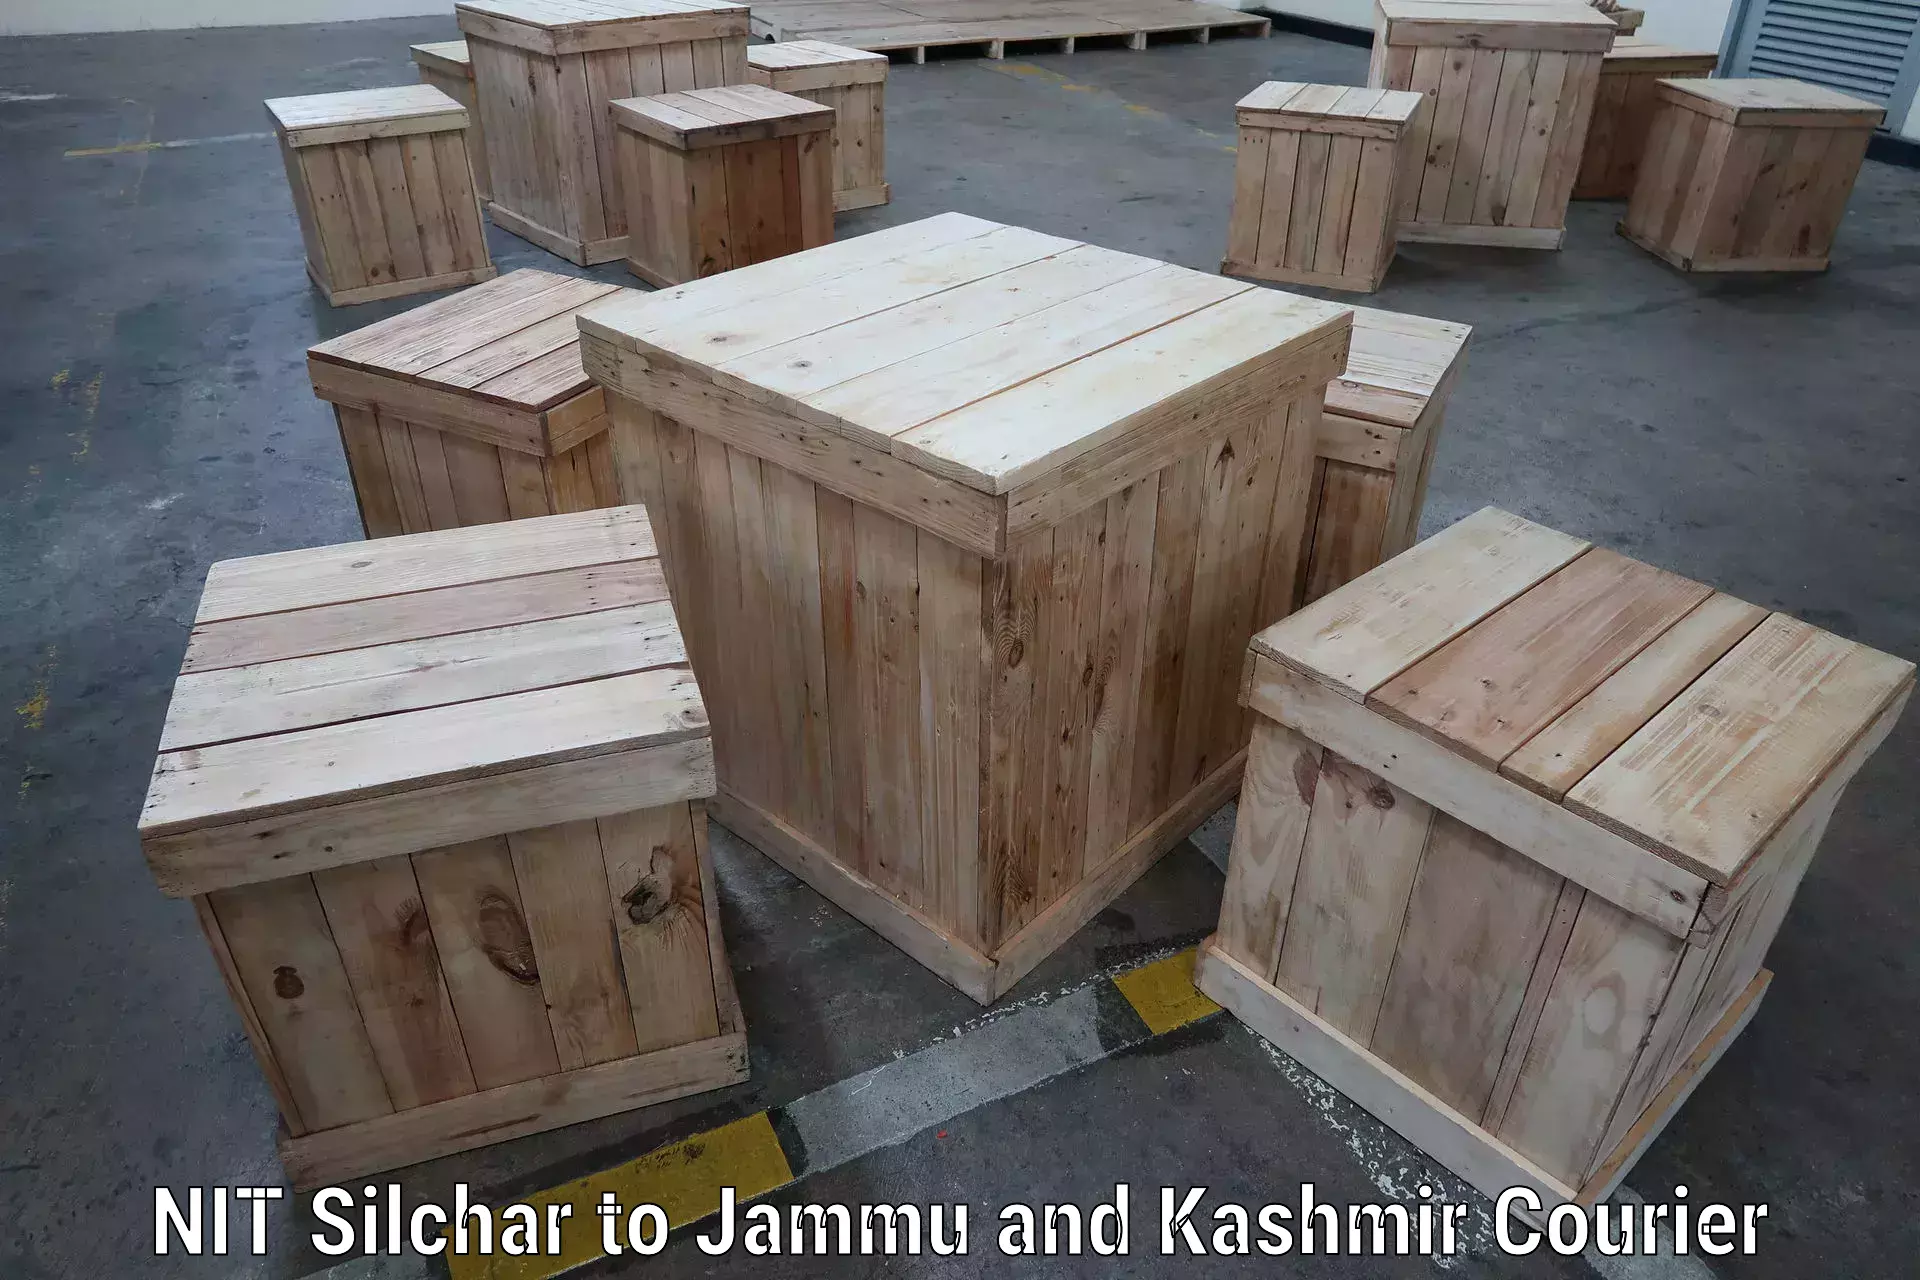 Express logistics providers NIT Silchar to Jammu